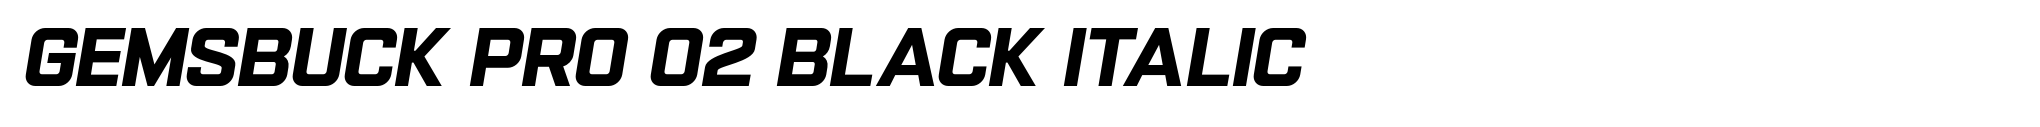 Gemsbuck Pro 02 Black Italic image